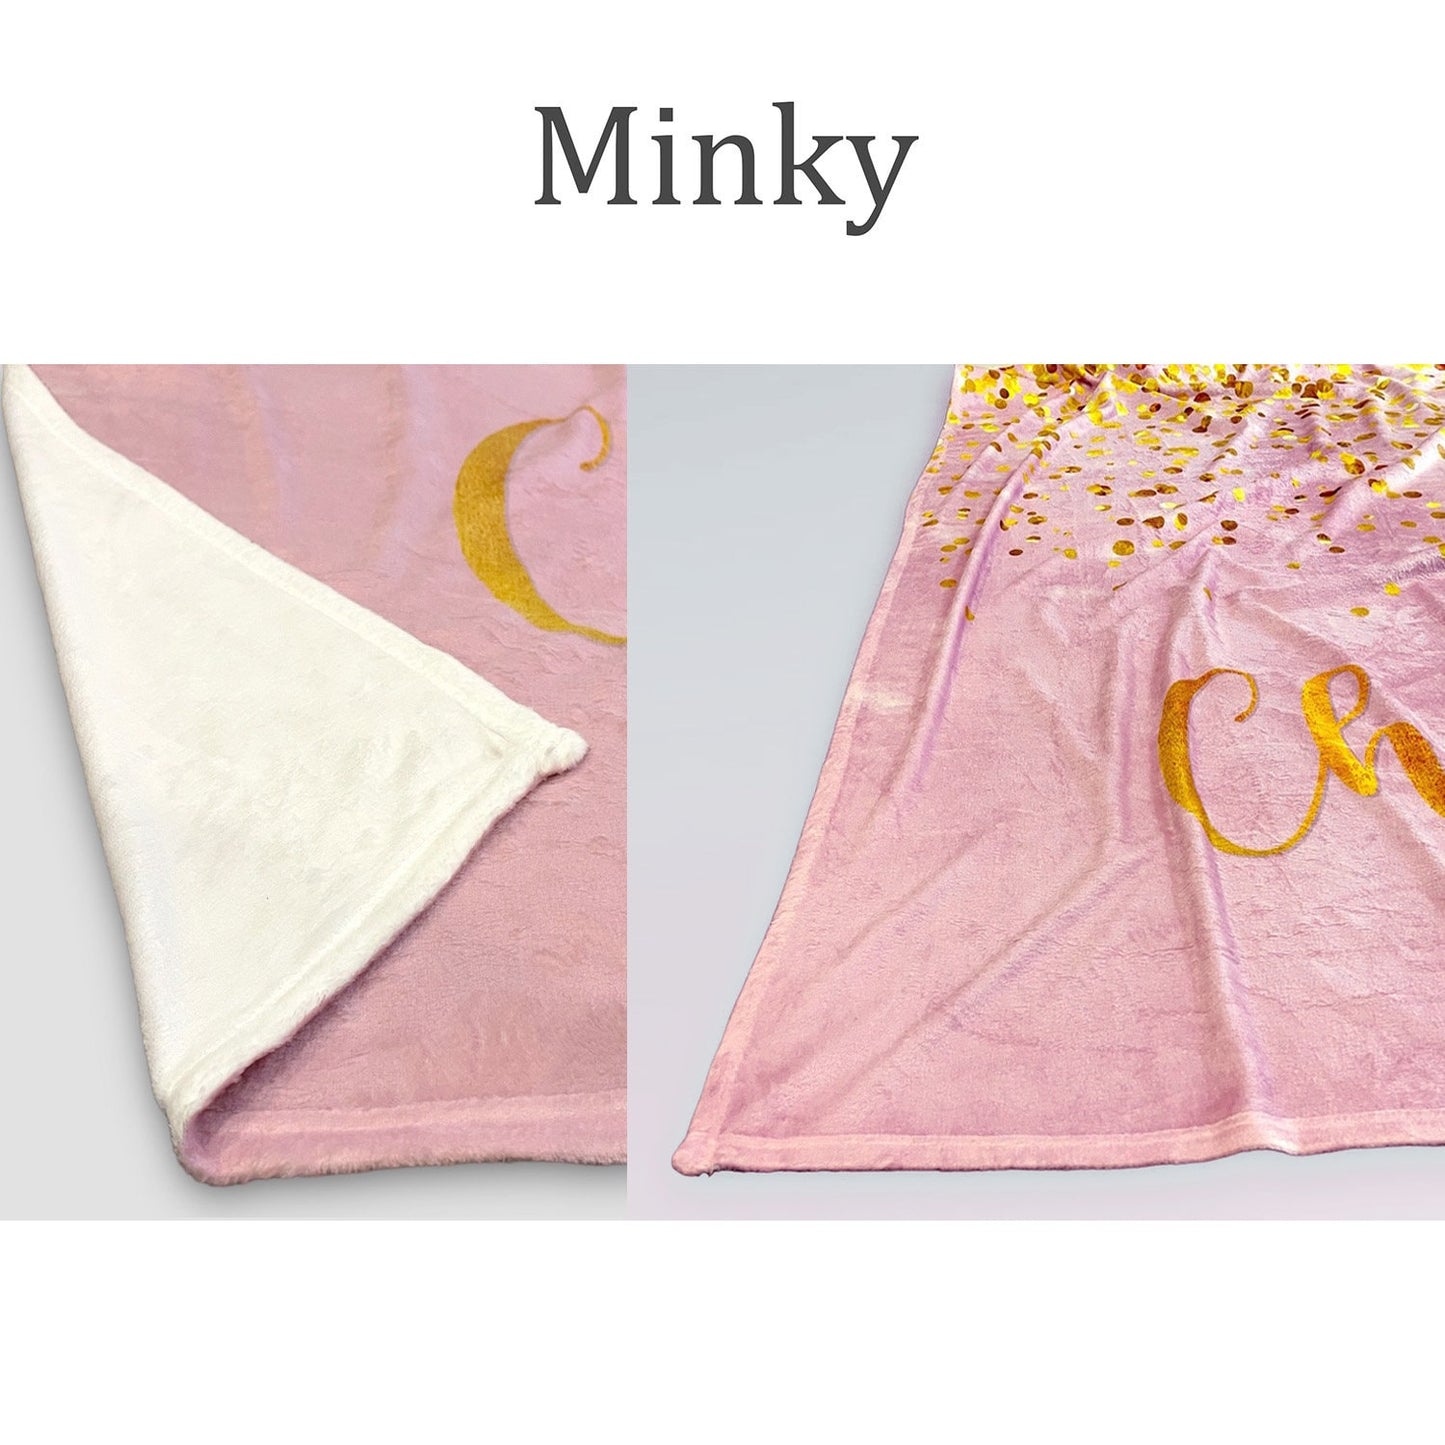 RUSTIC Style personalize blanket with custom name, Minky or Sherpa custom blanket, Baby blanket, birthday gift idea